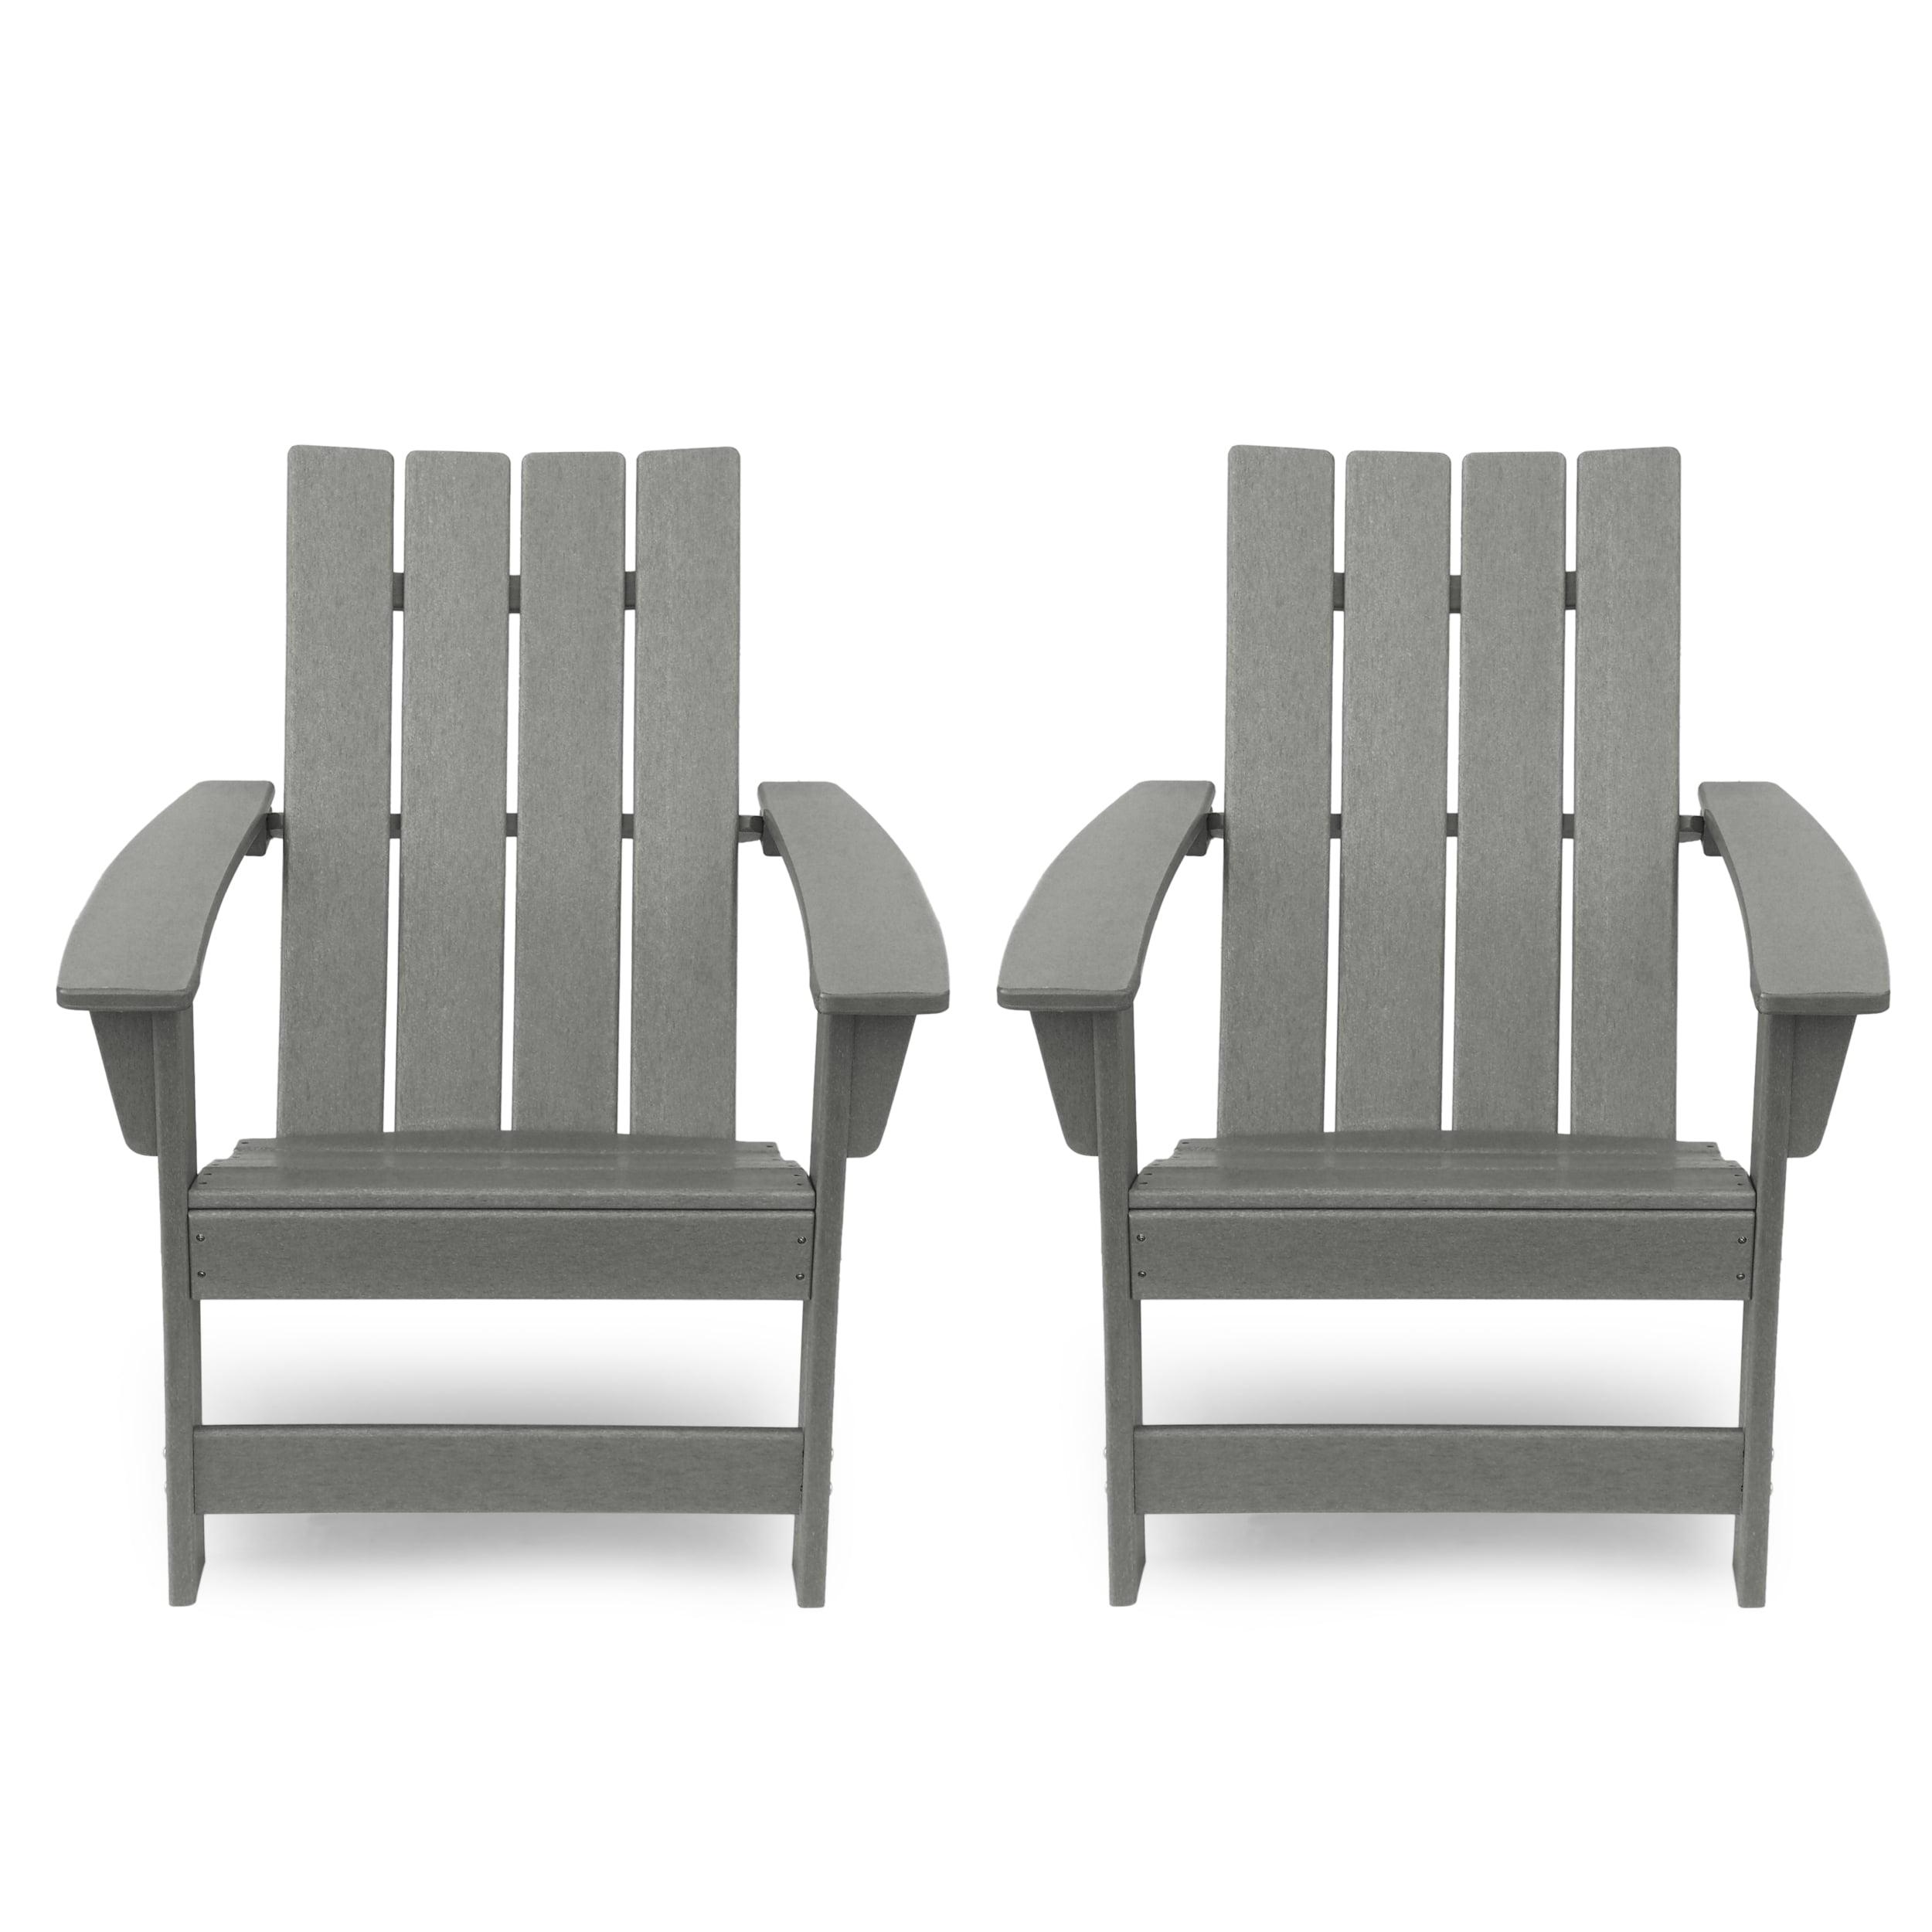 Sleek Modern Gray Plastic Adirondack Chair Set of 2